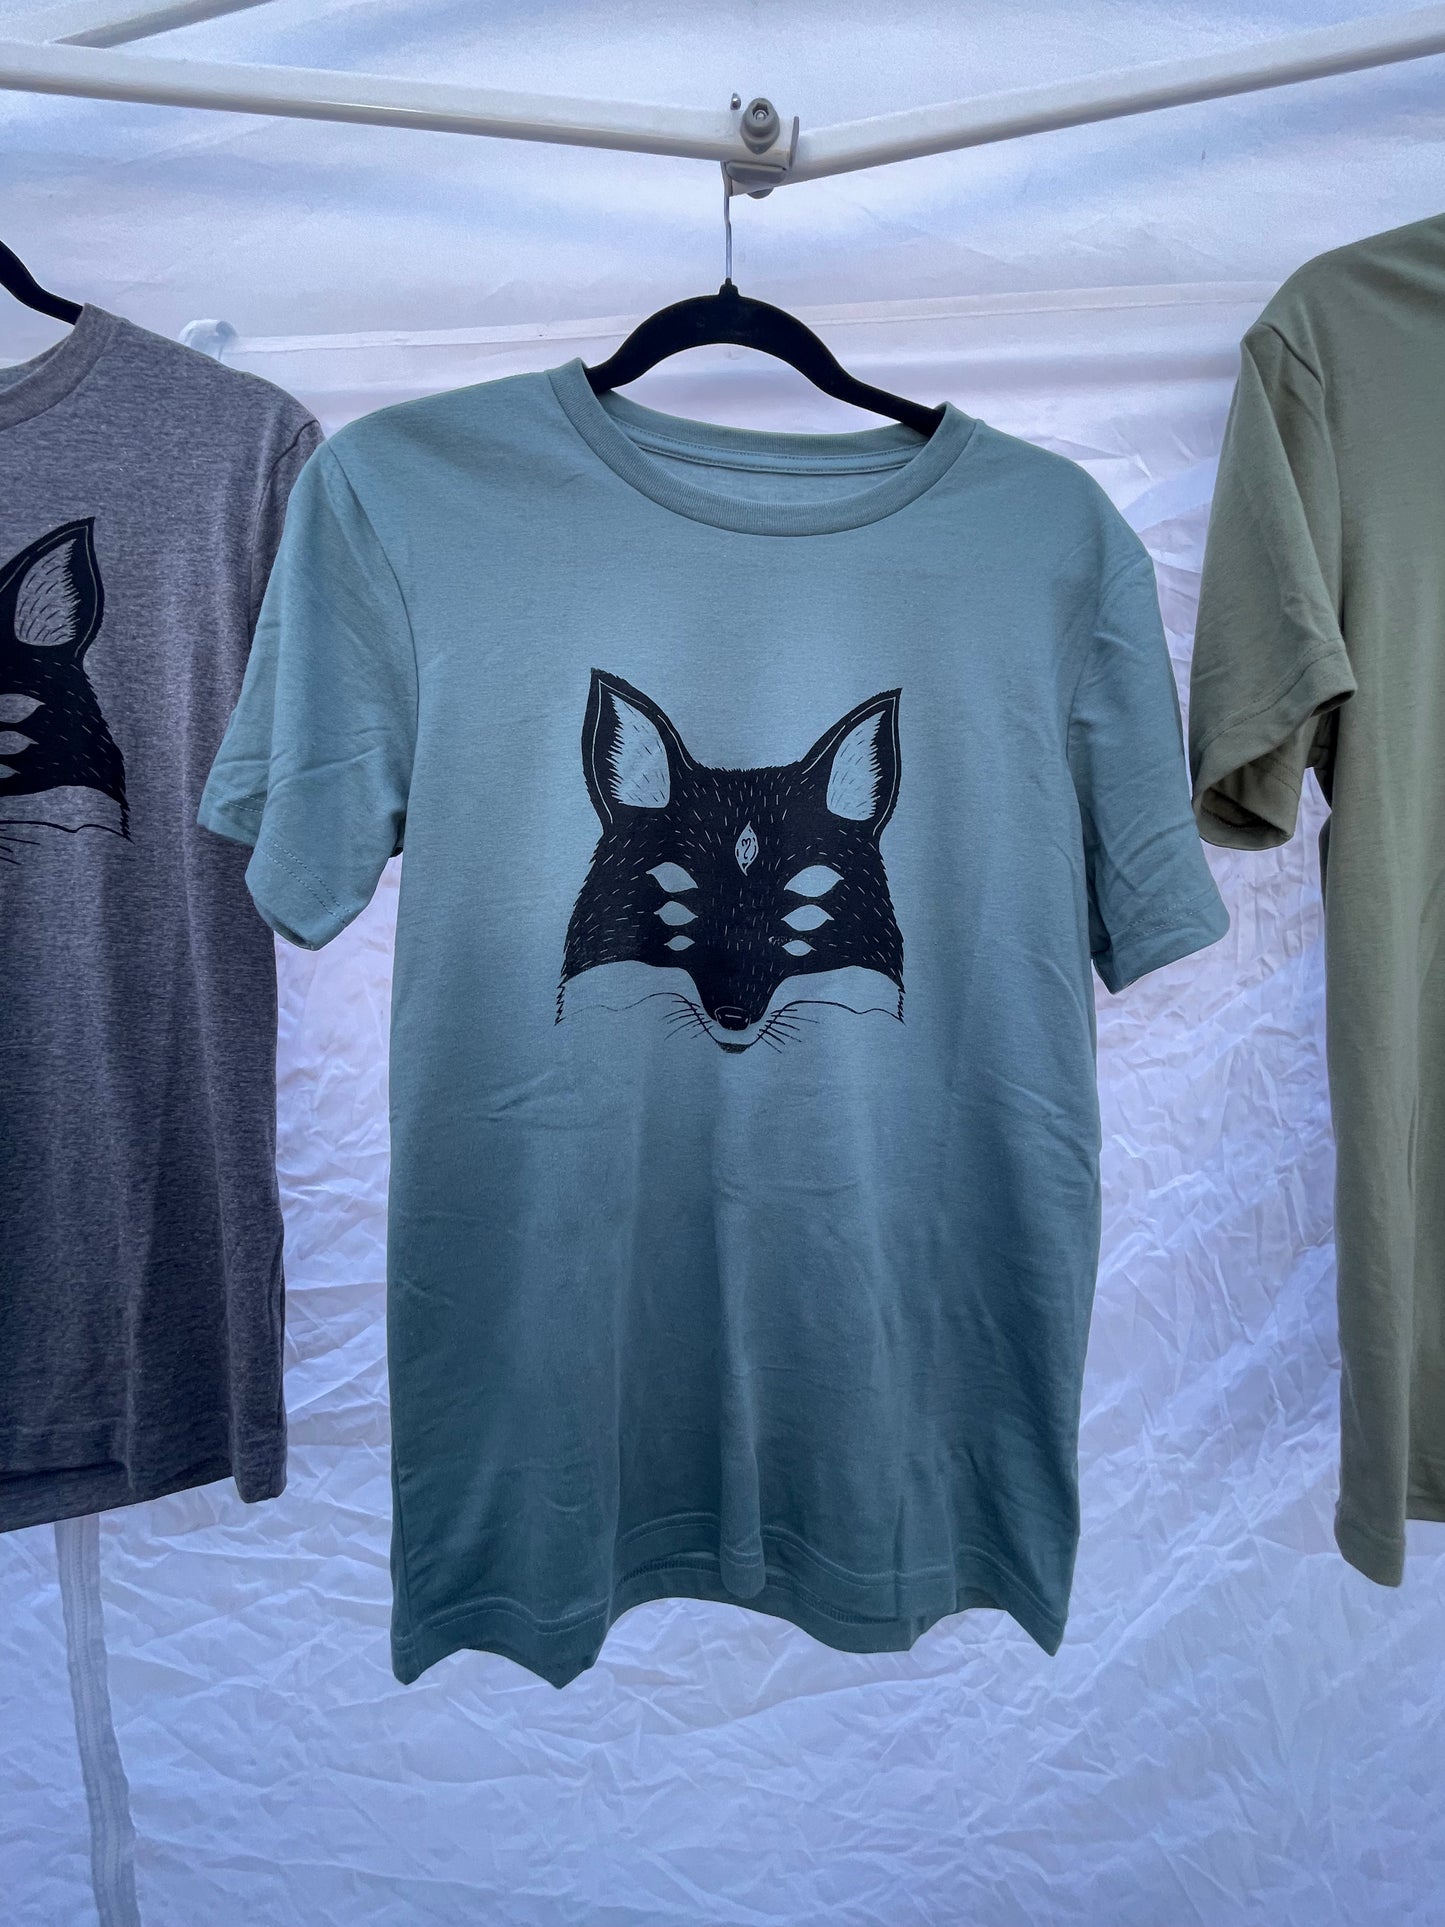 Fox logo screen printed shirts